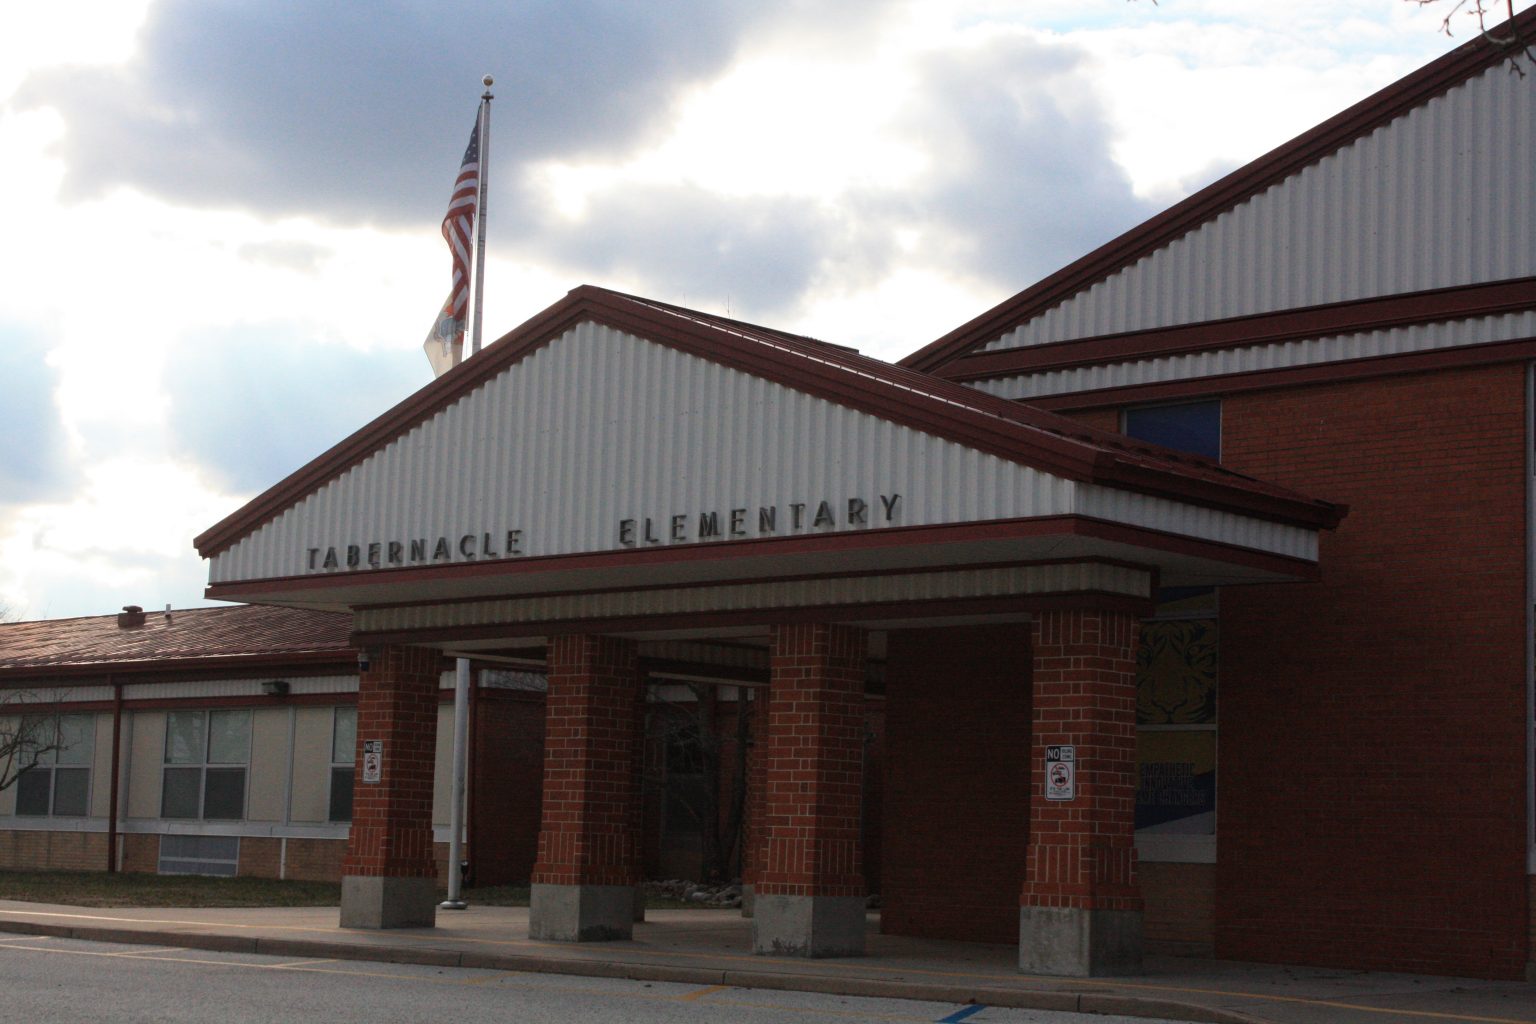 Tabernacle school district begins budget talks - The Sun Newspapers